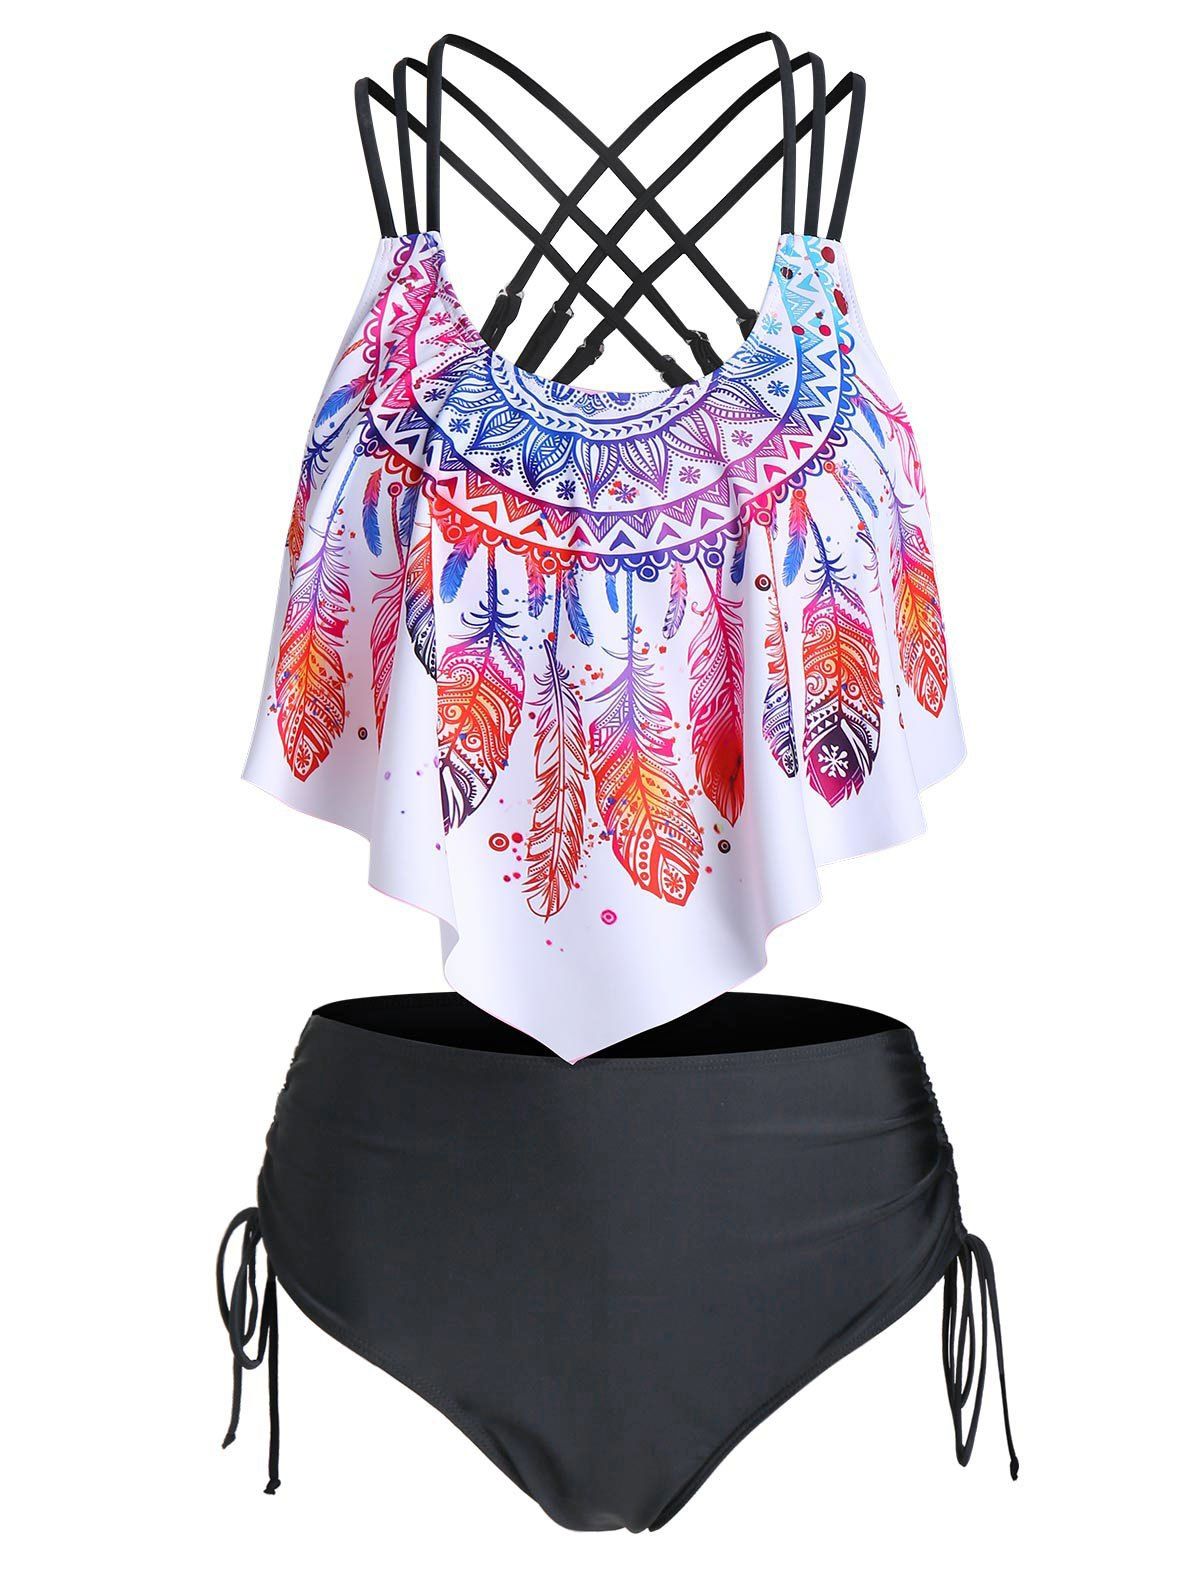 Bohemian Tankini Swimsuit Feather Floral Print Bathing Suit Crisscross Cinched Beach Swimwear - multicolor A 3XL